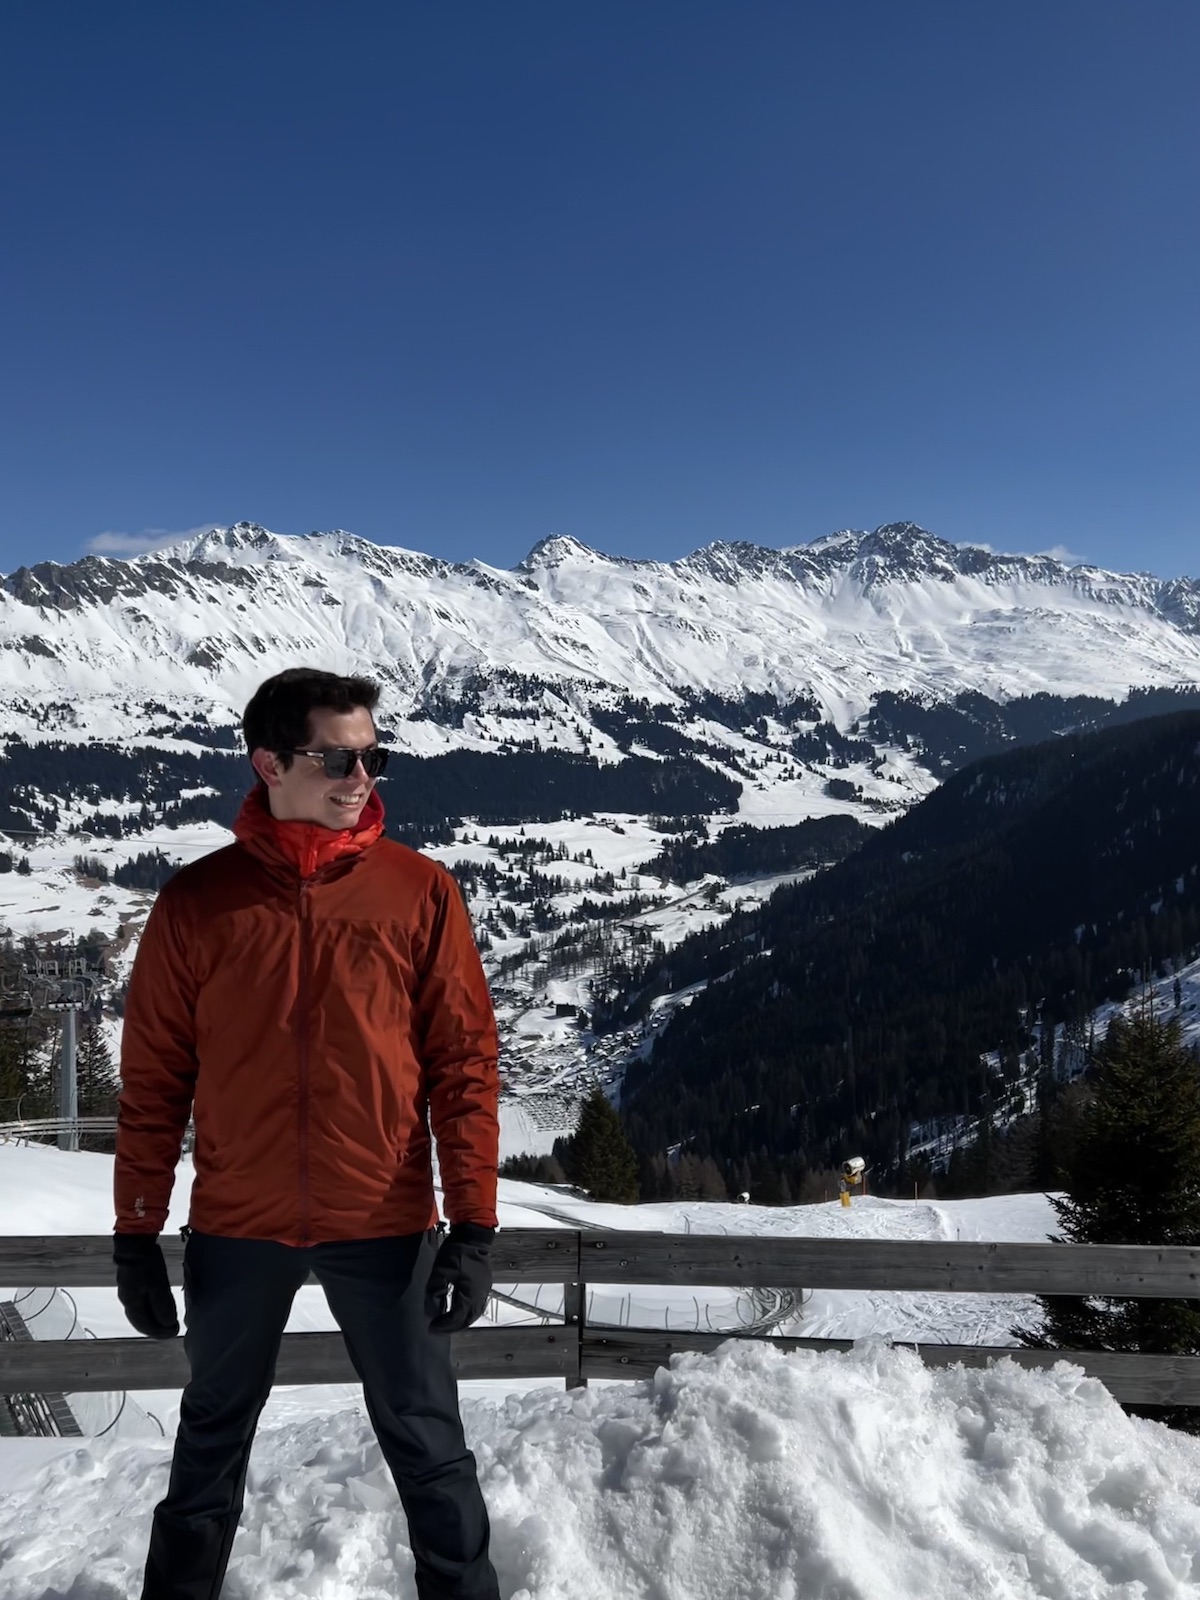 Ricardo de Rio stands in front of a snowy mountain range in Switzerland.